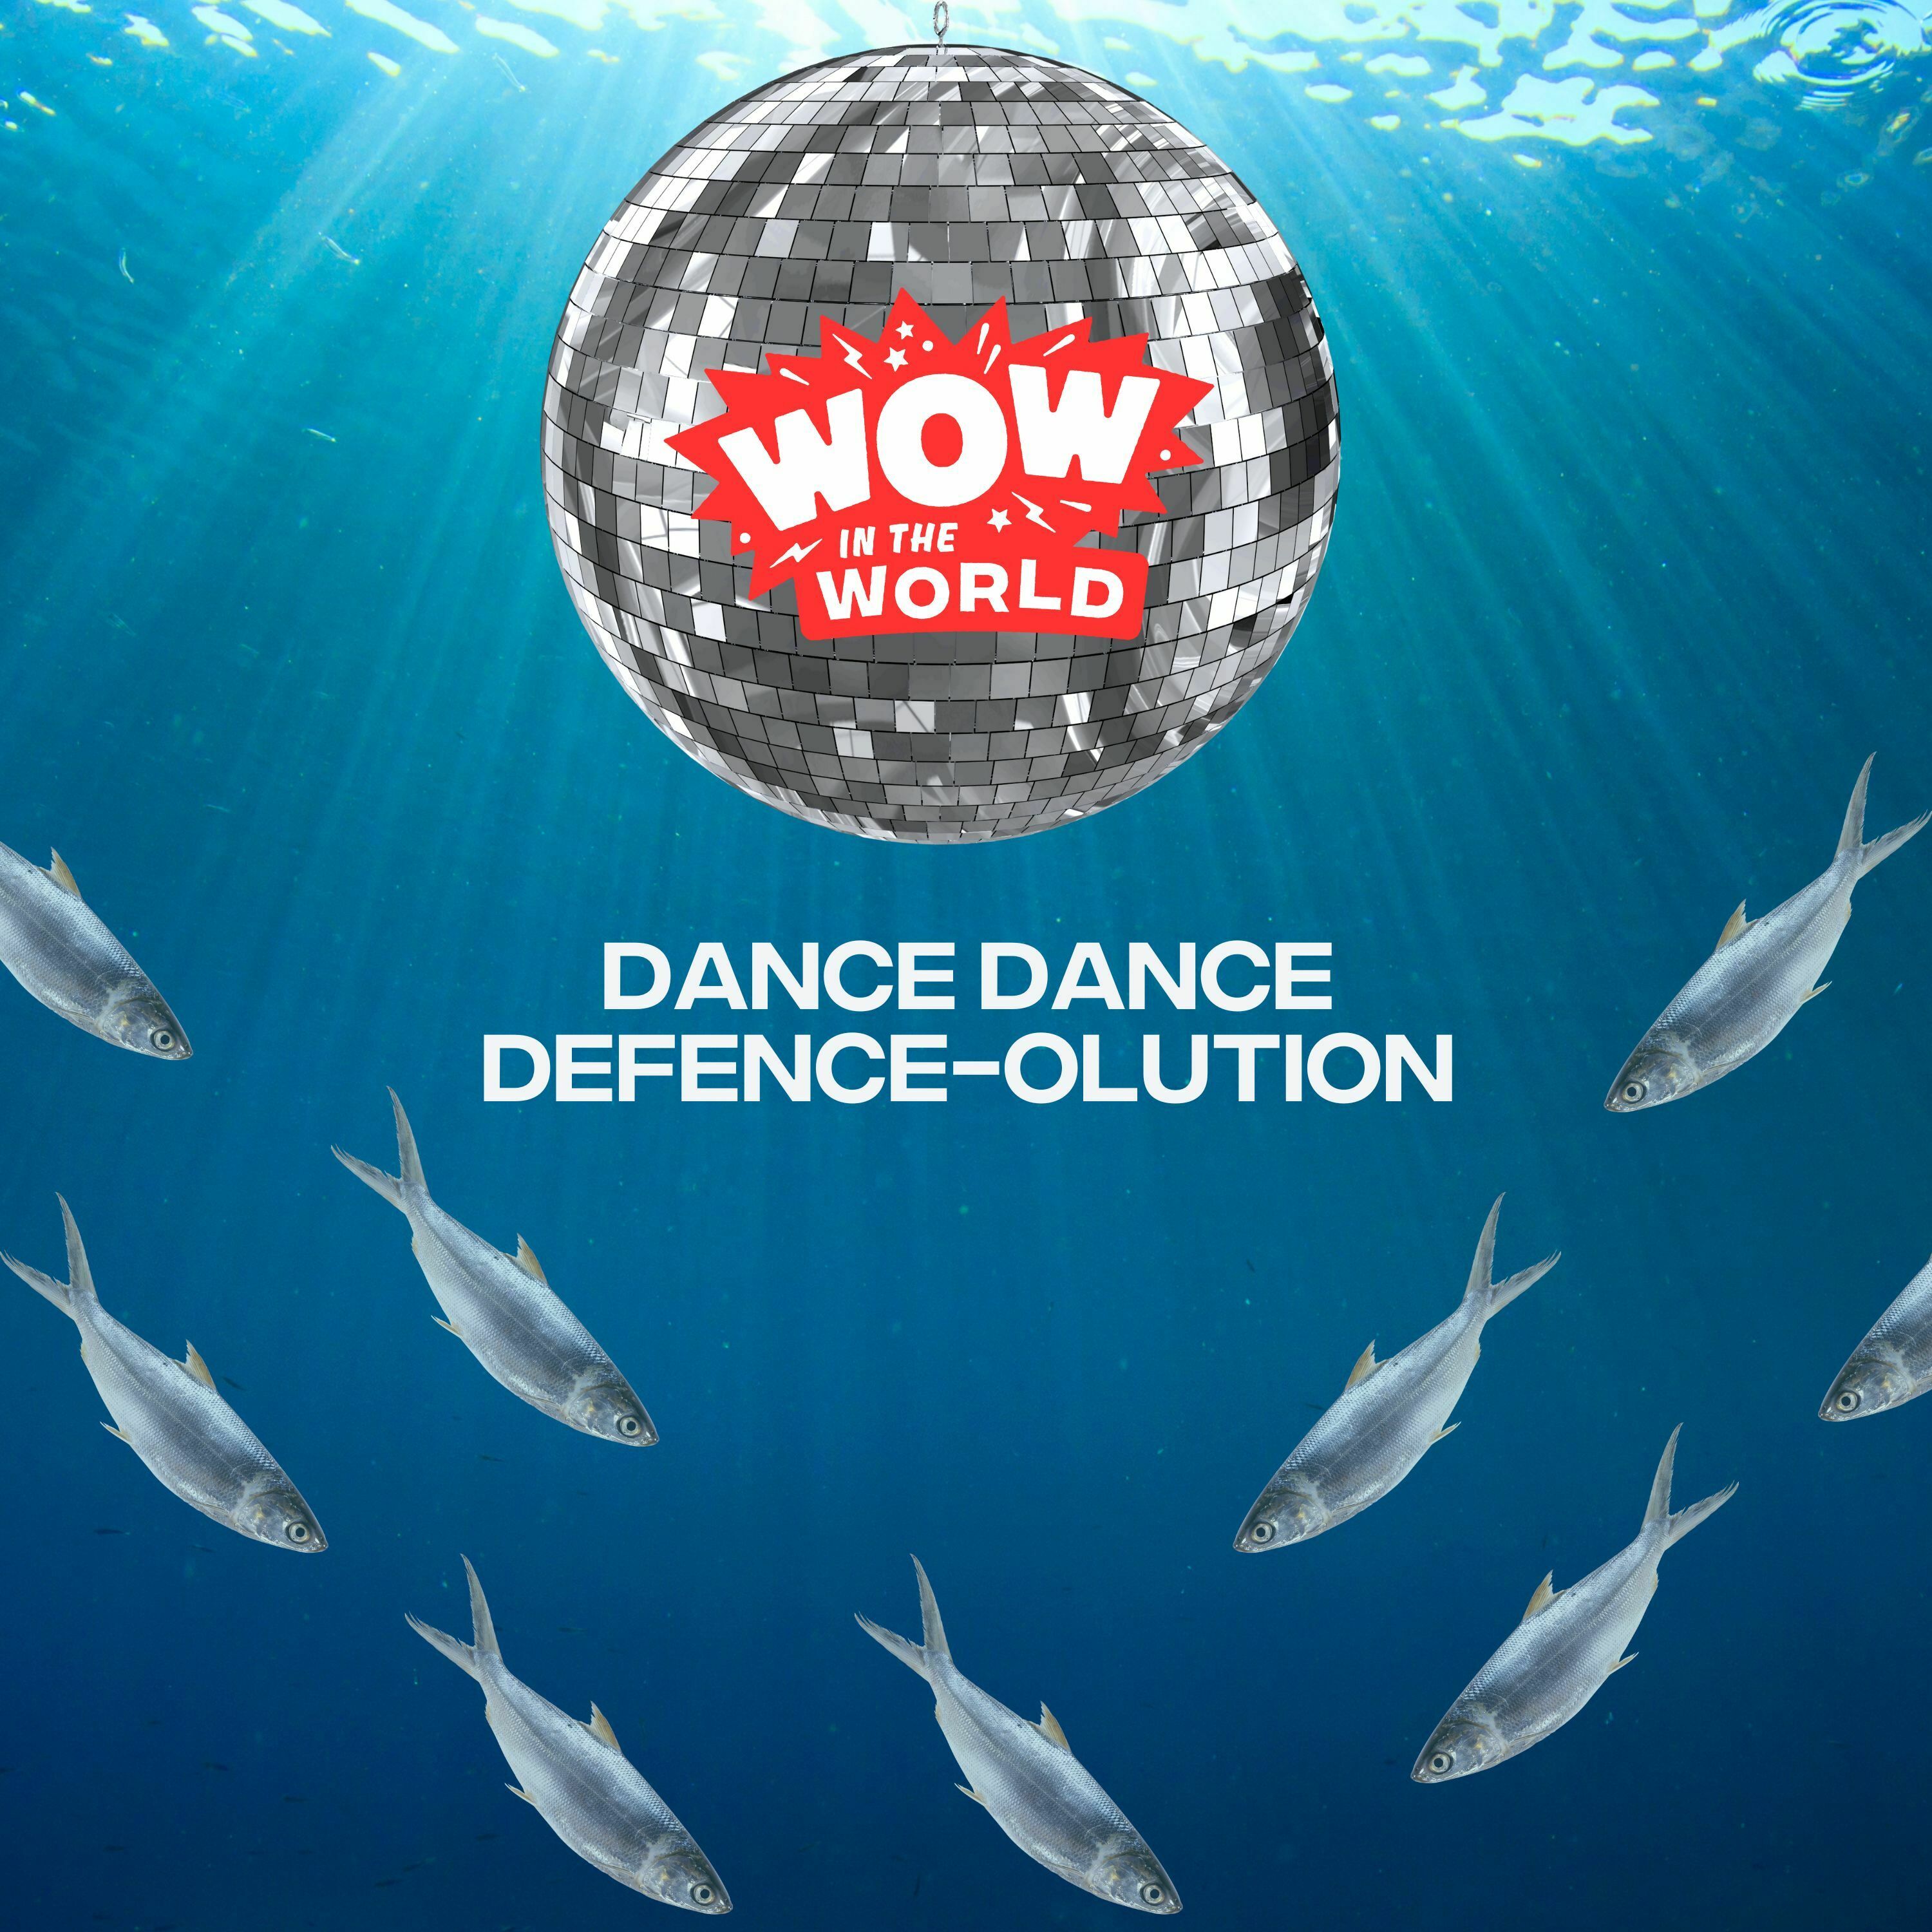 Dance Dance Defence-olution!